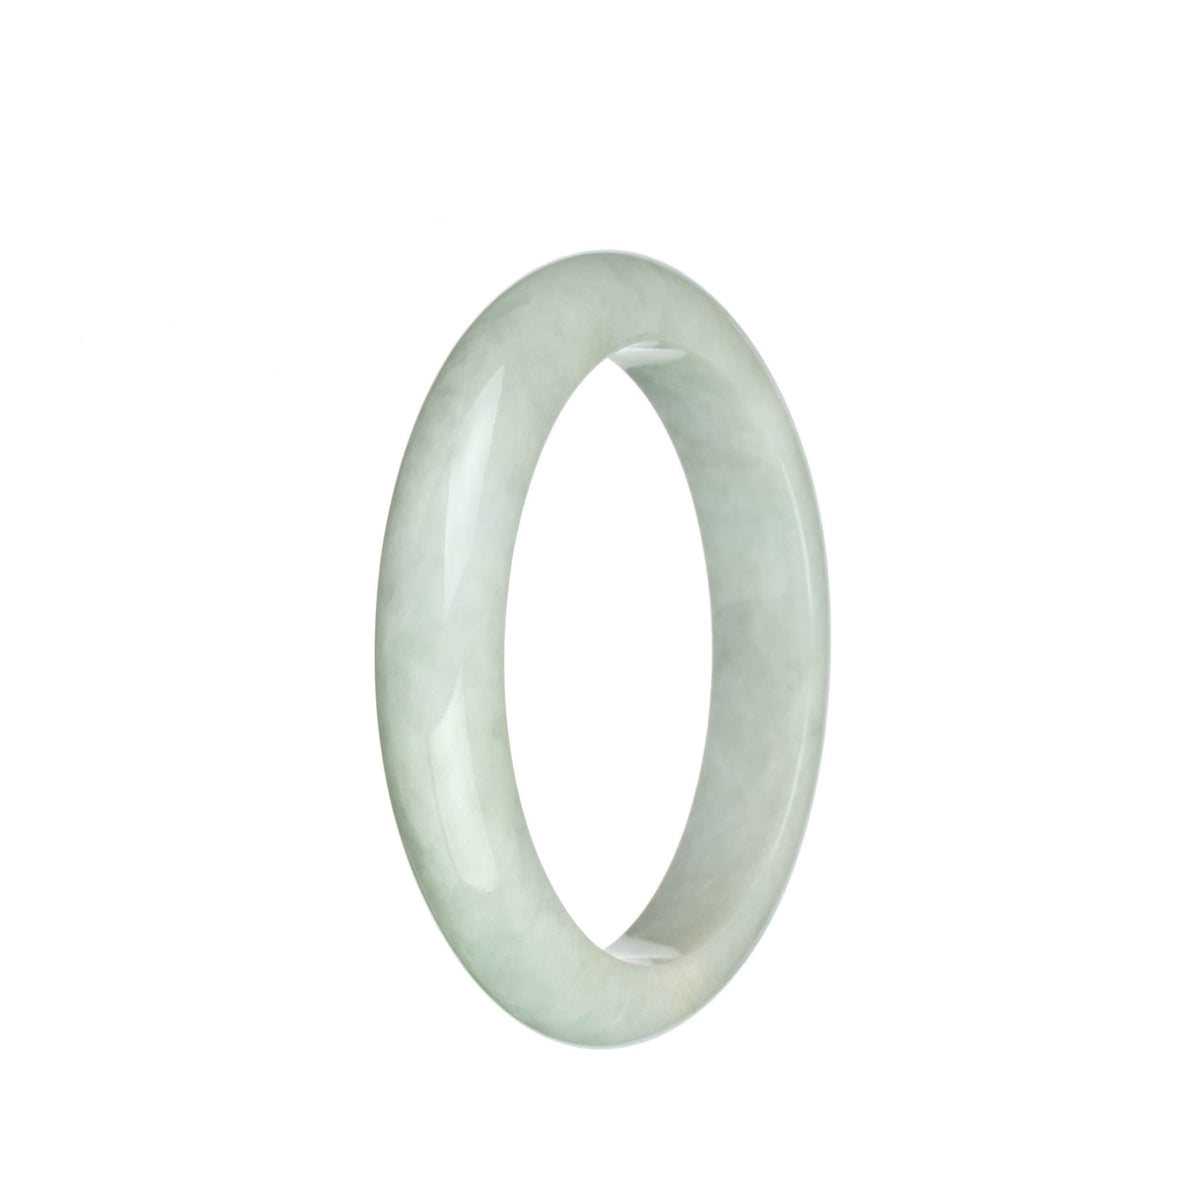 Genuine Type A Pale Green with White Patch Jadeite Jade Bangle Bracelet - 59mm Semi Round